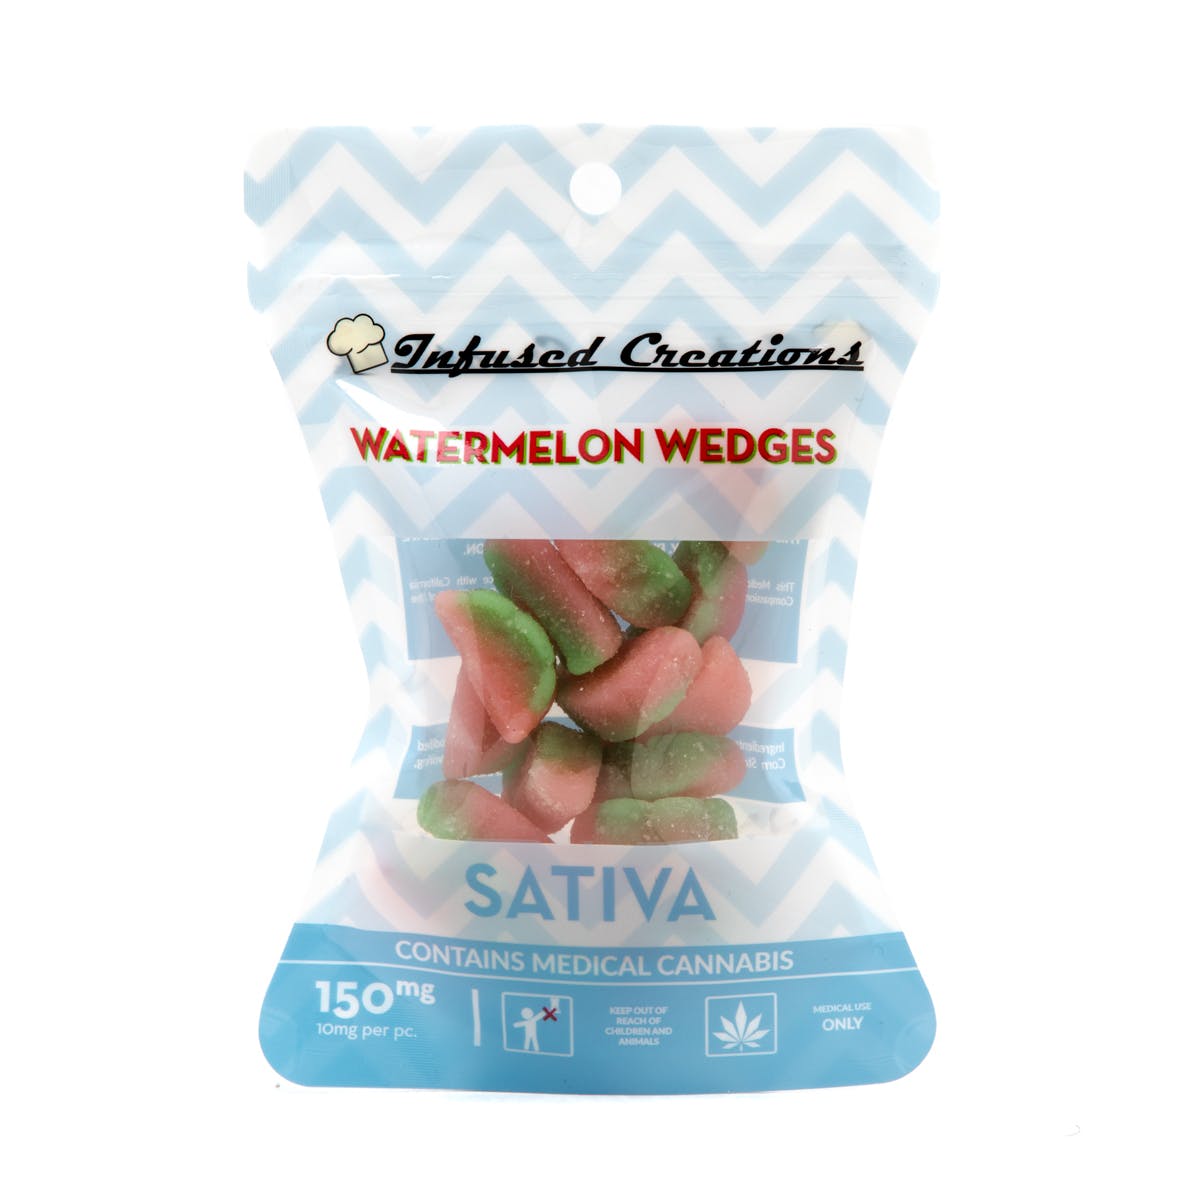 Watermelon Wedges Sativa, 150mg